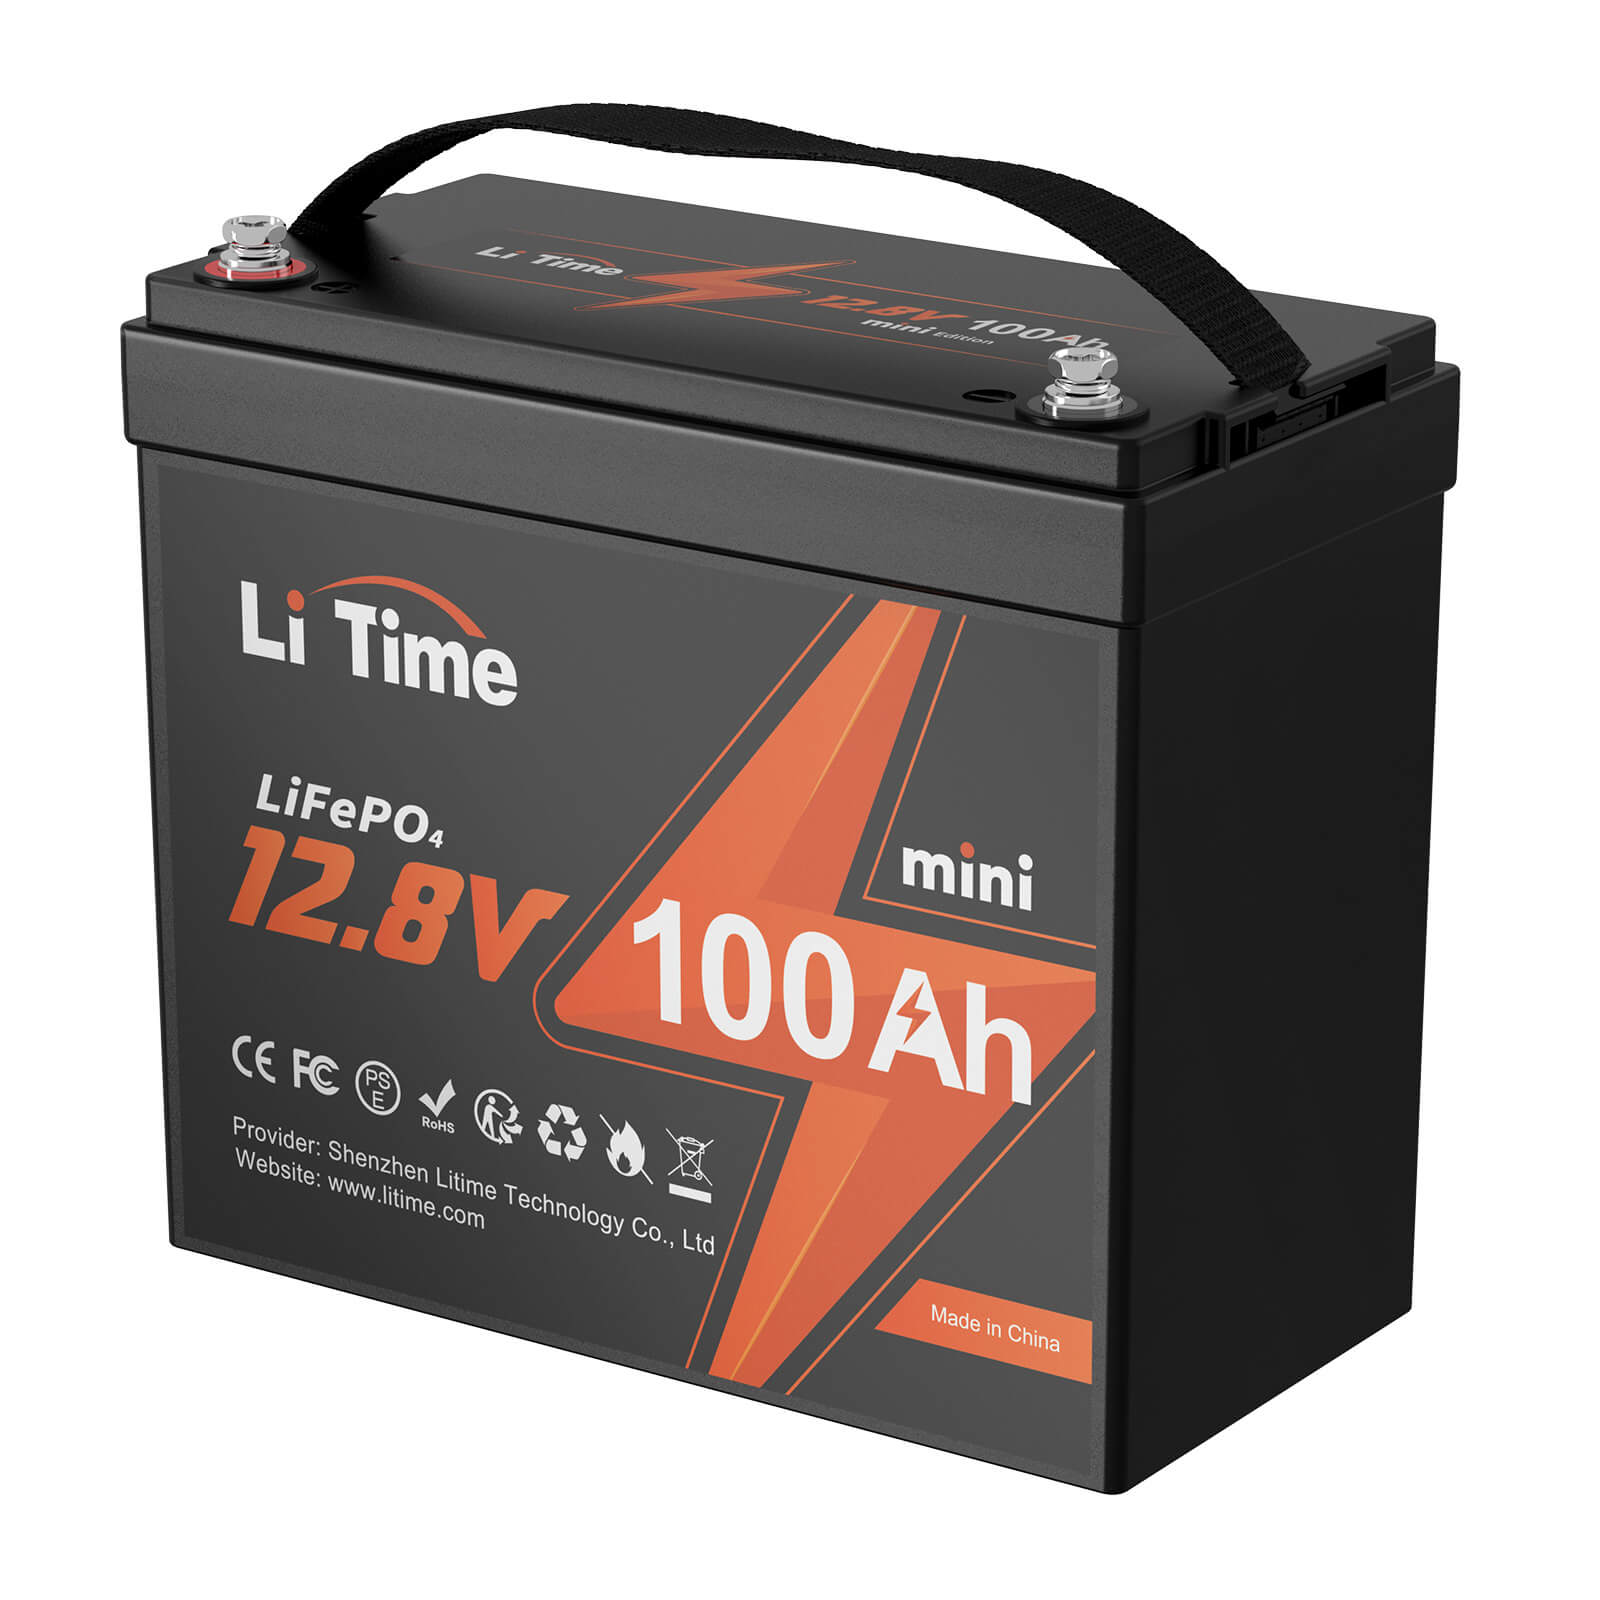 [0% MwSt.] LiTime 12V 100Ah MINI LiFePO4 Batterie